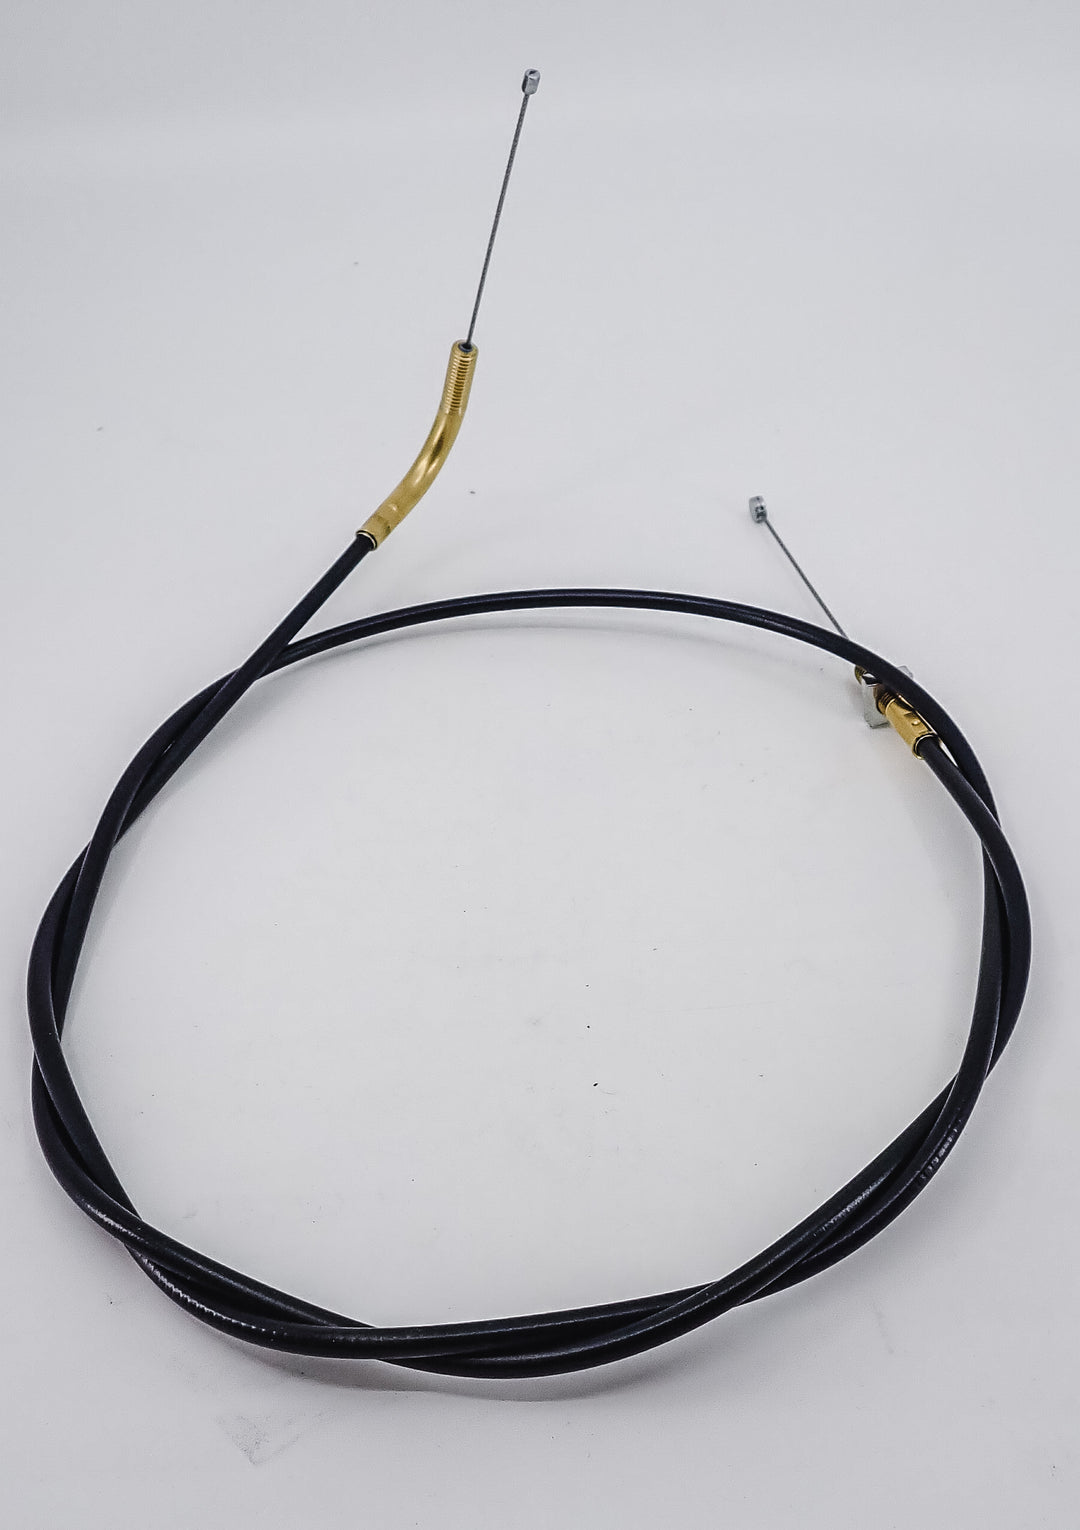 GENUINE ECHO THROTTLE CABLE FITS SRM-410U V430000340